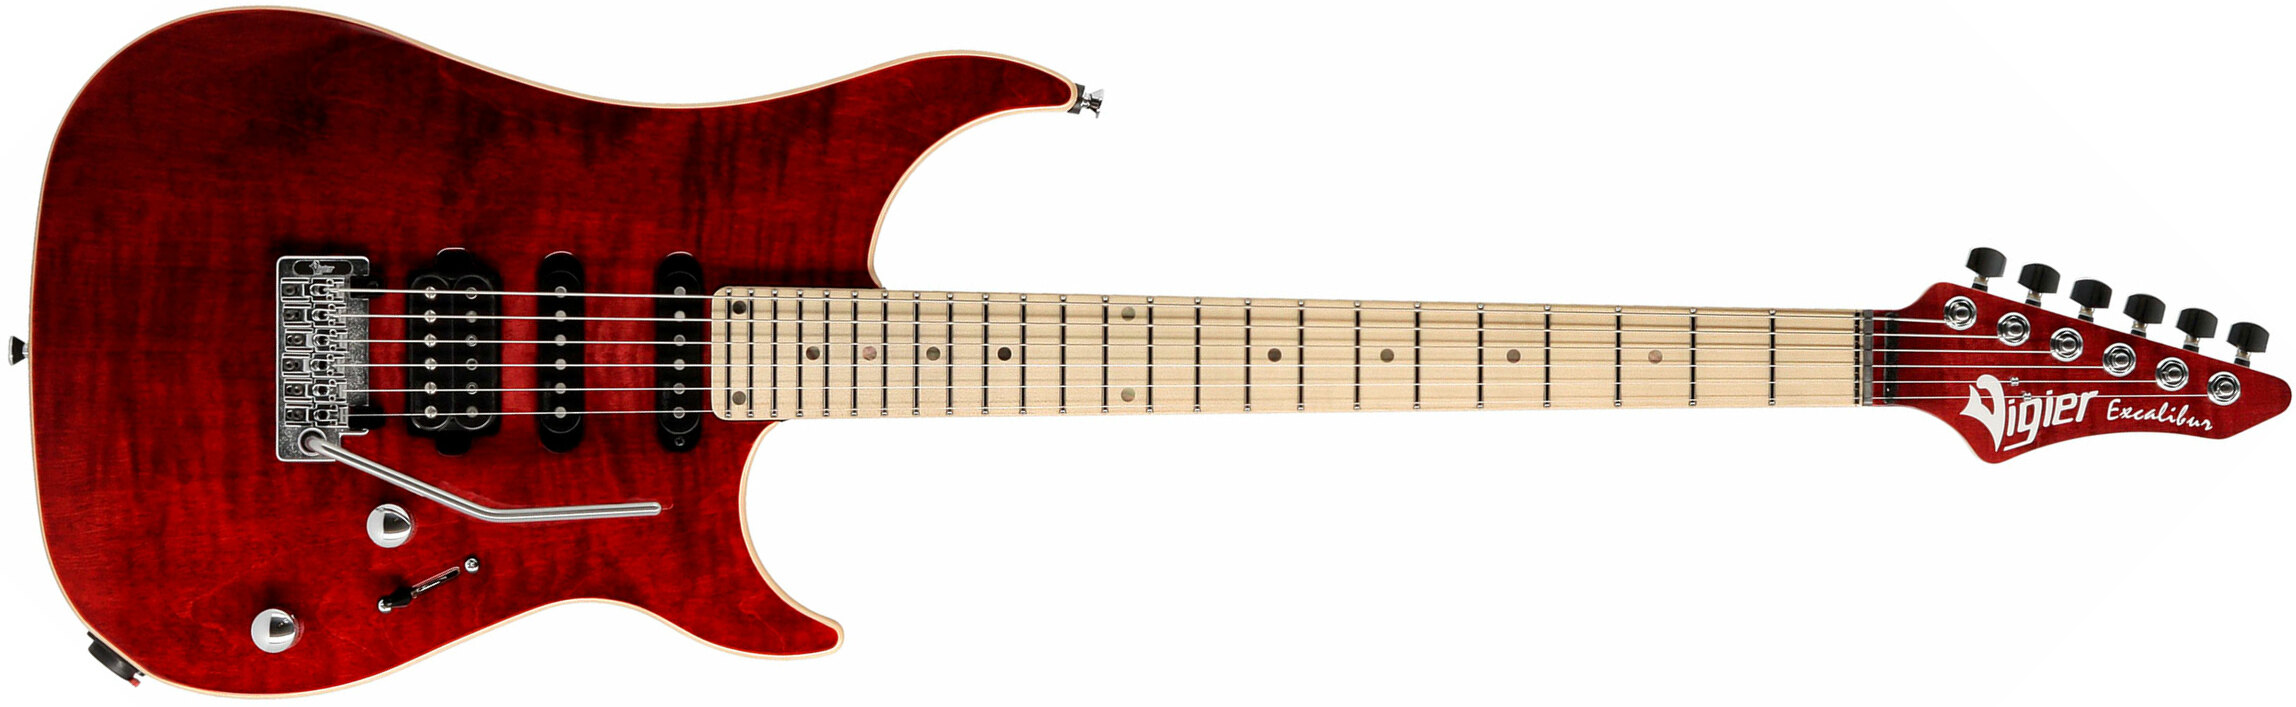 Vigier Excalibur Ultra Blues Hss Trem Mn - Ruby - Elektrische gitaar in Str-vorm - Main picture